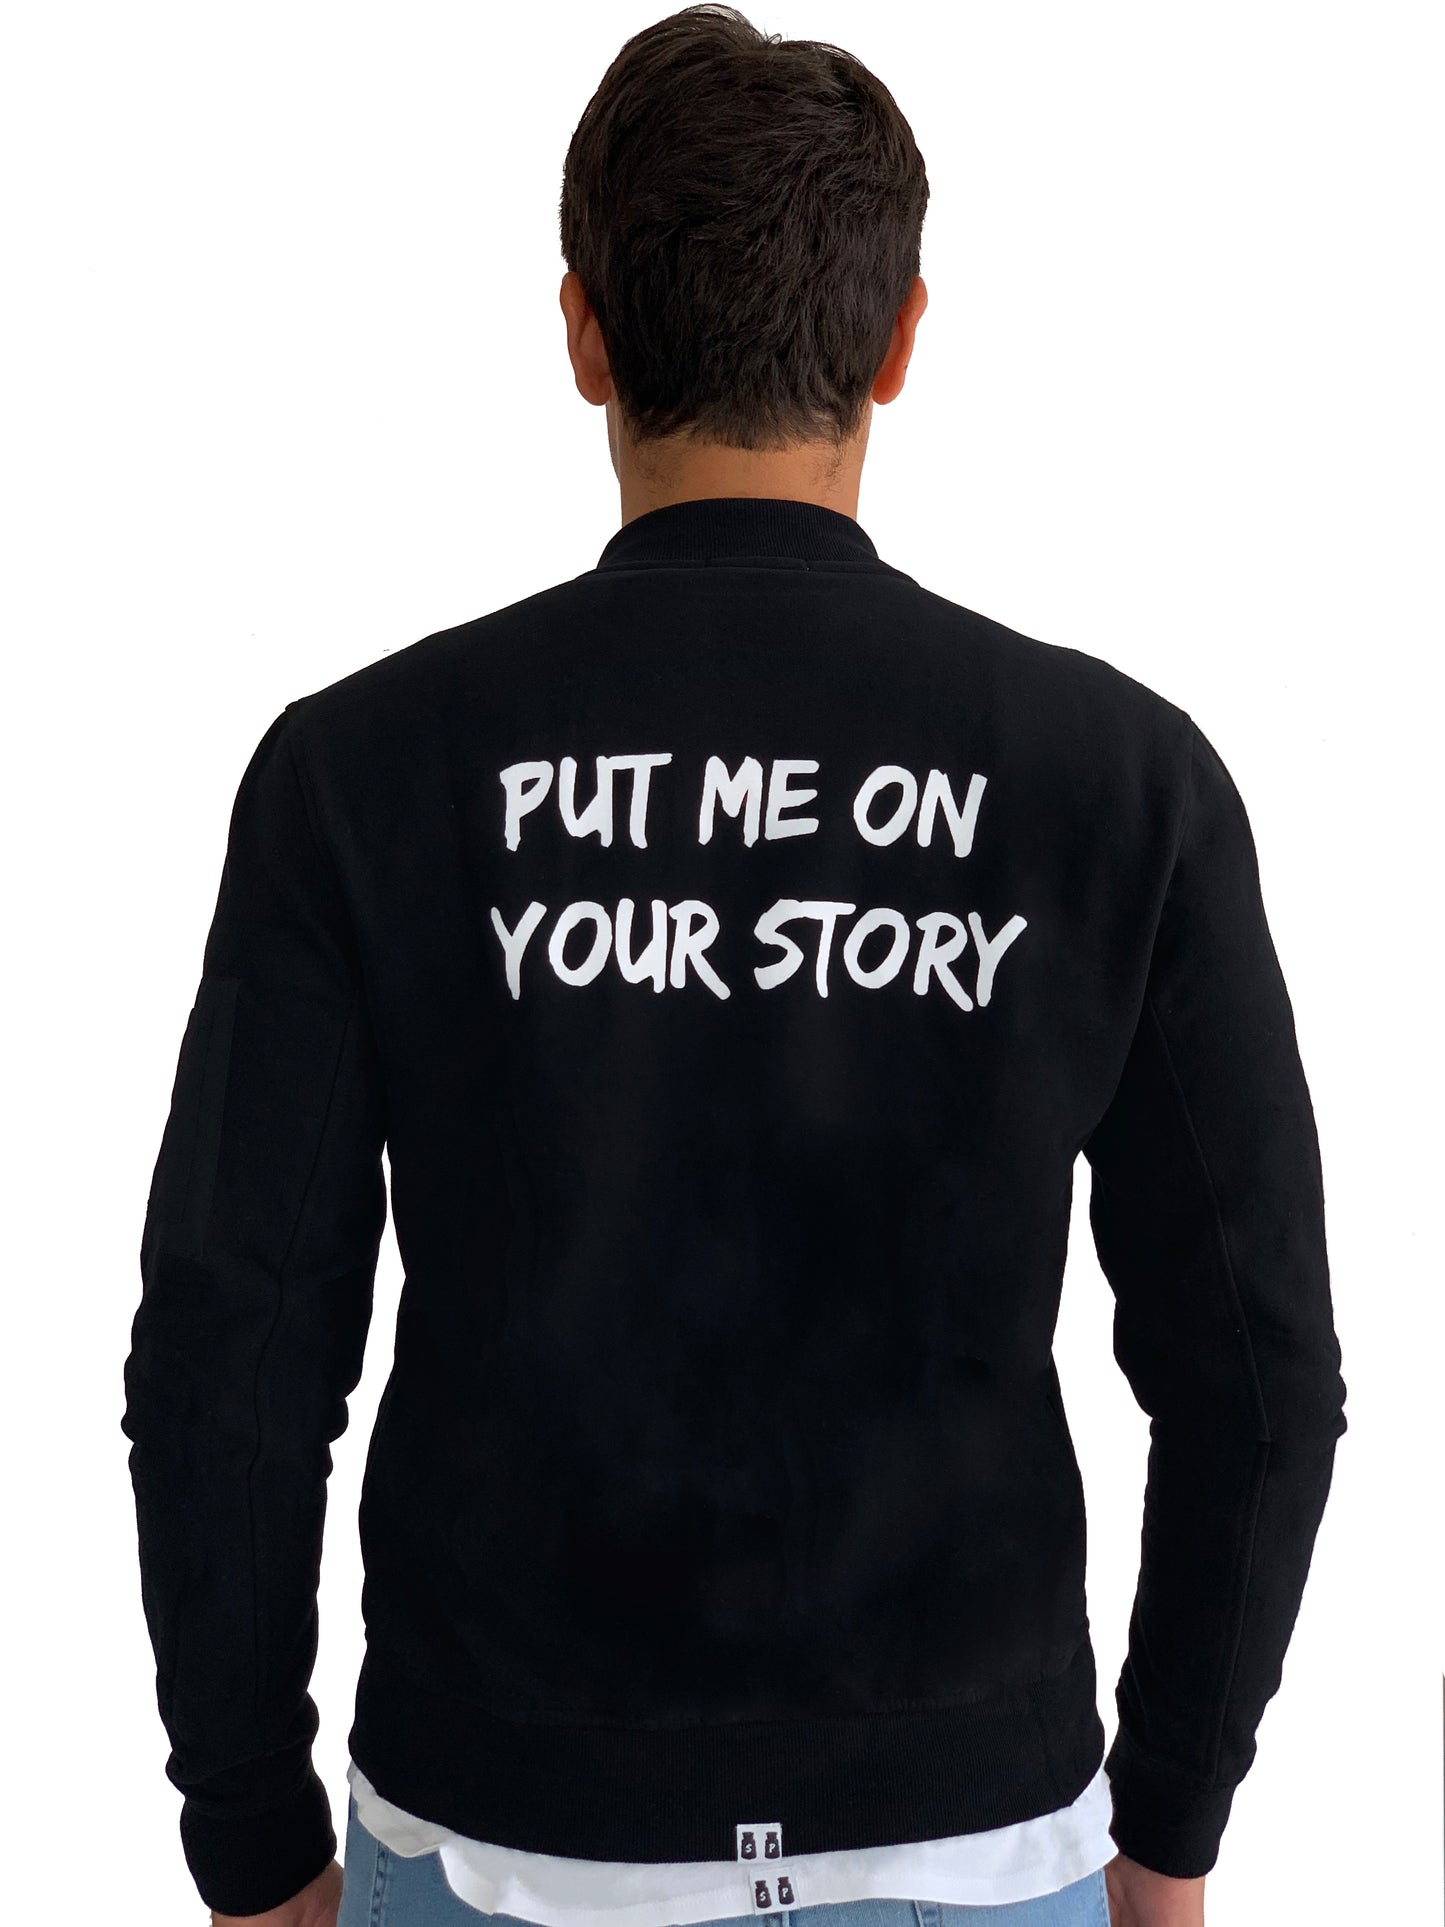 Men's Black Bomber Jacket - "Put Me On your Story"